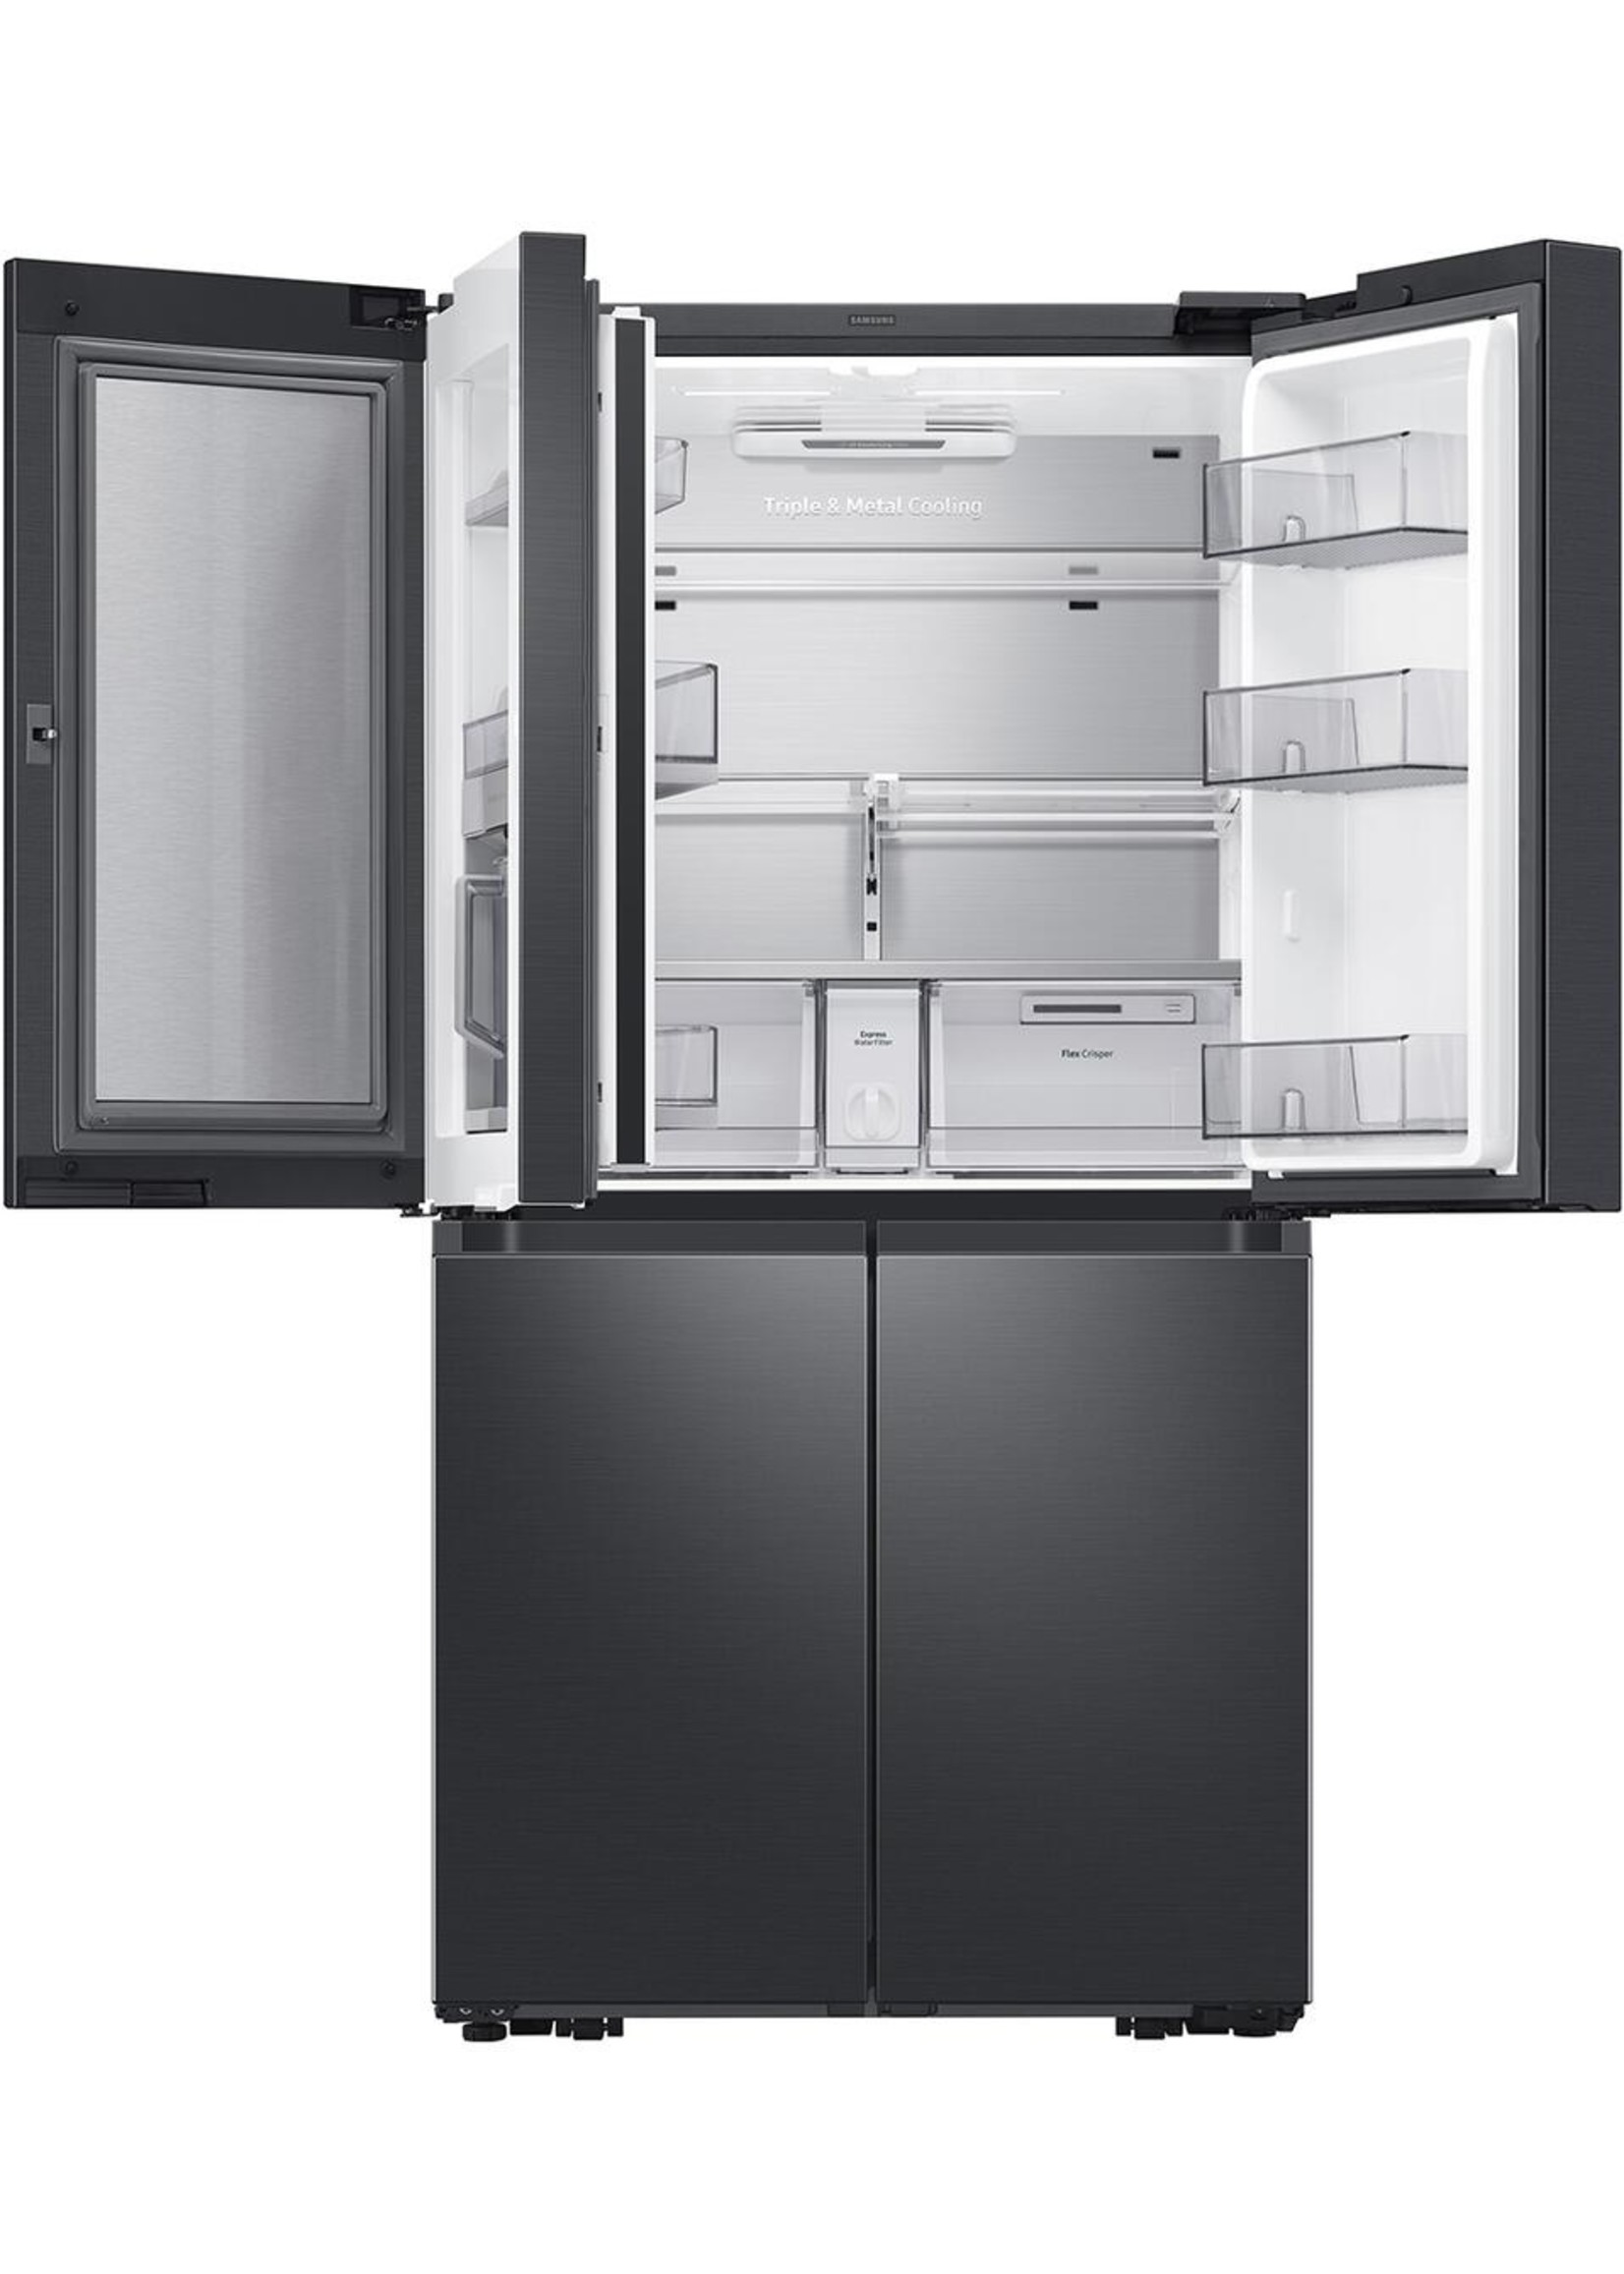 SAMSUNG Samsung 23 cu. ft. 4-Door Flex Food Showcase French Door Refrigerator in Black Stainless, Counter Depth